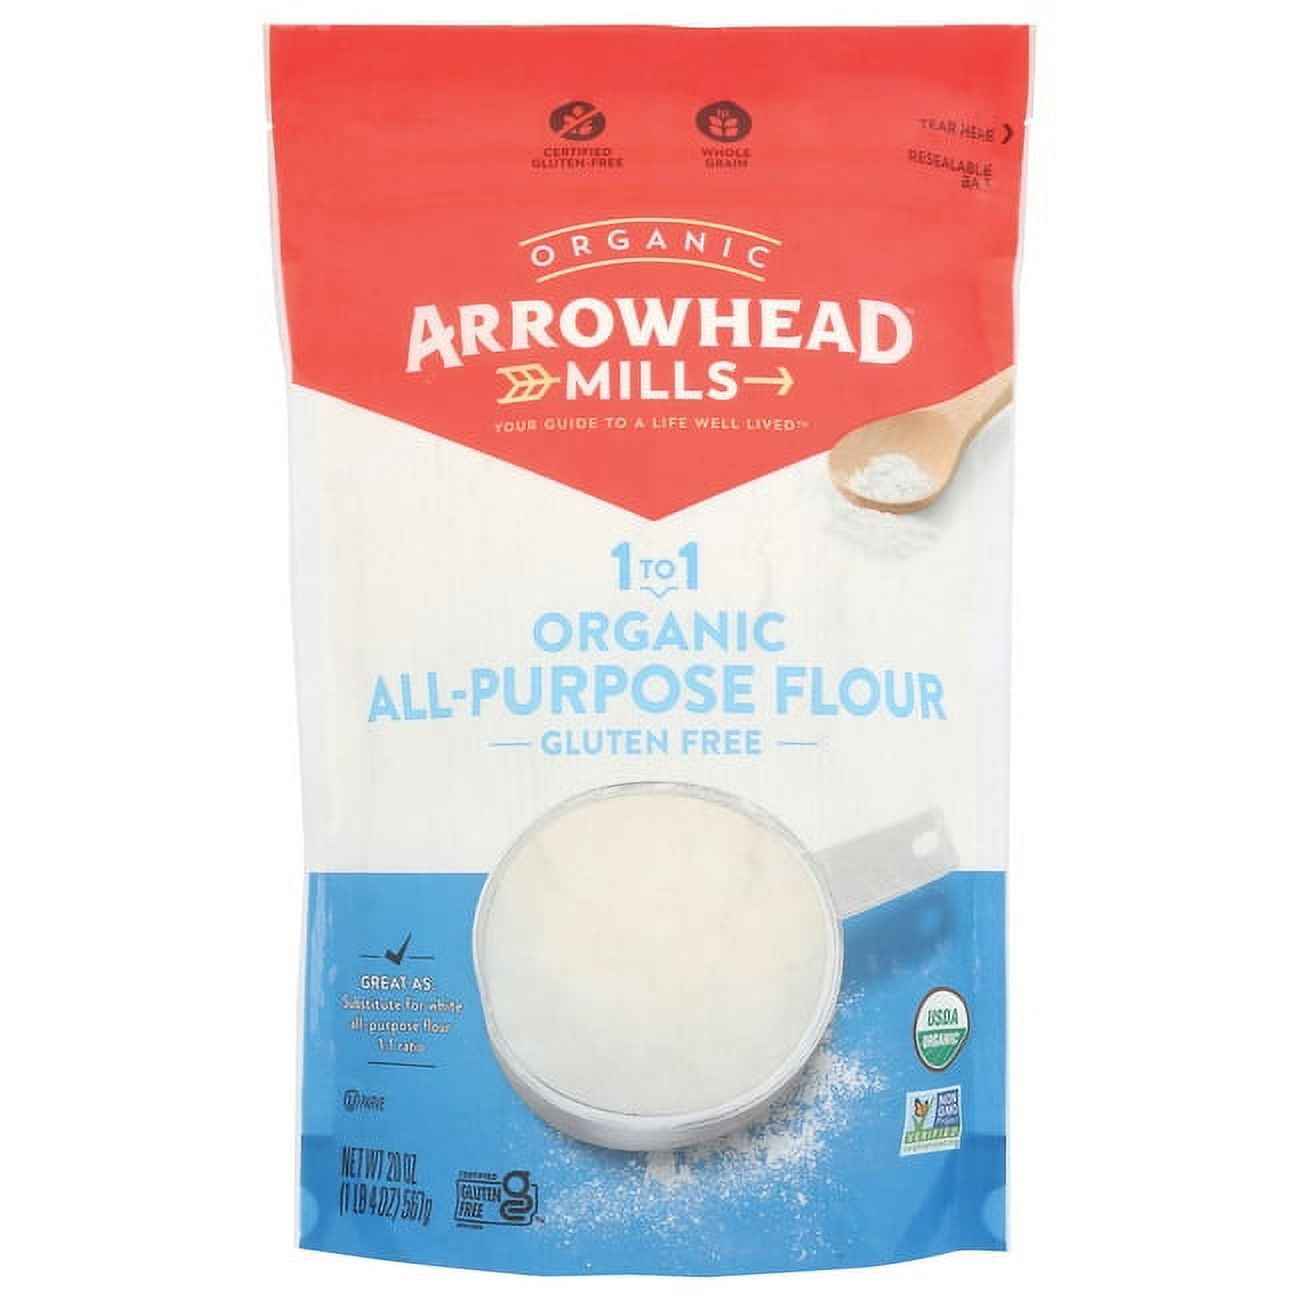 Arrowhead Mills All Purpose Organic Flour 20 oz Bag